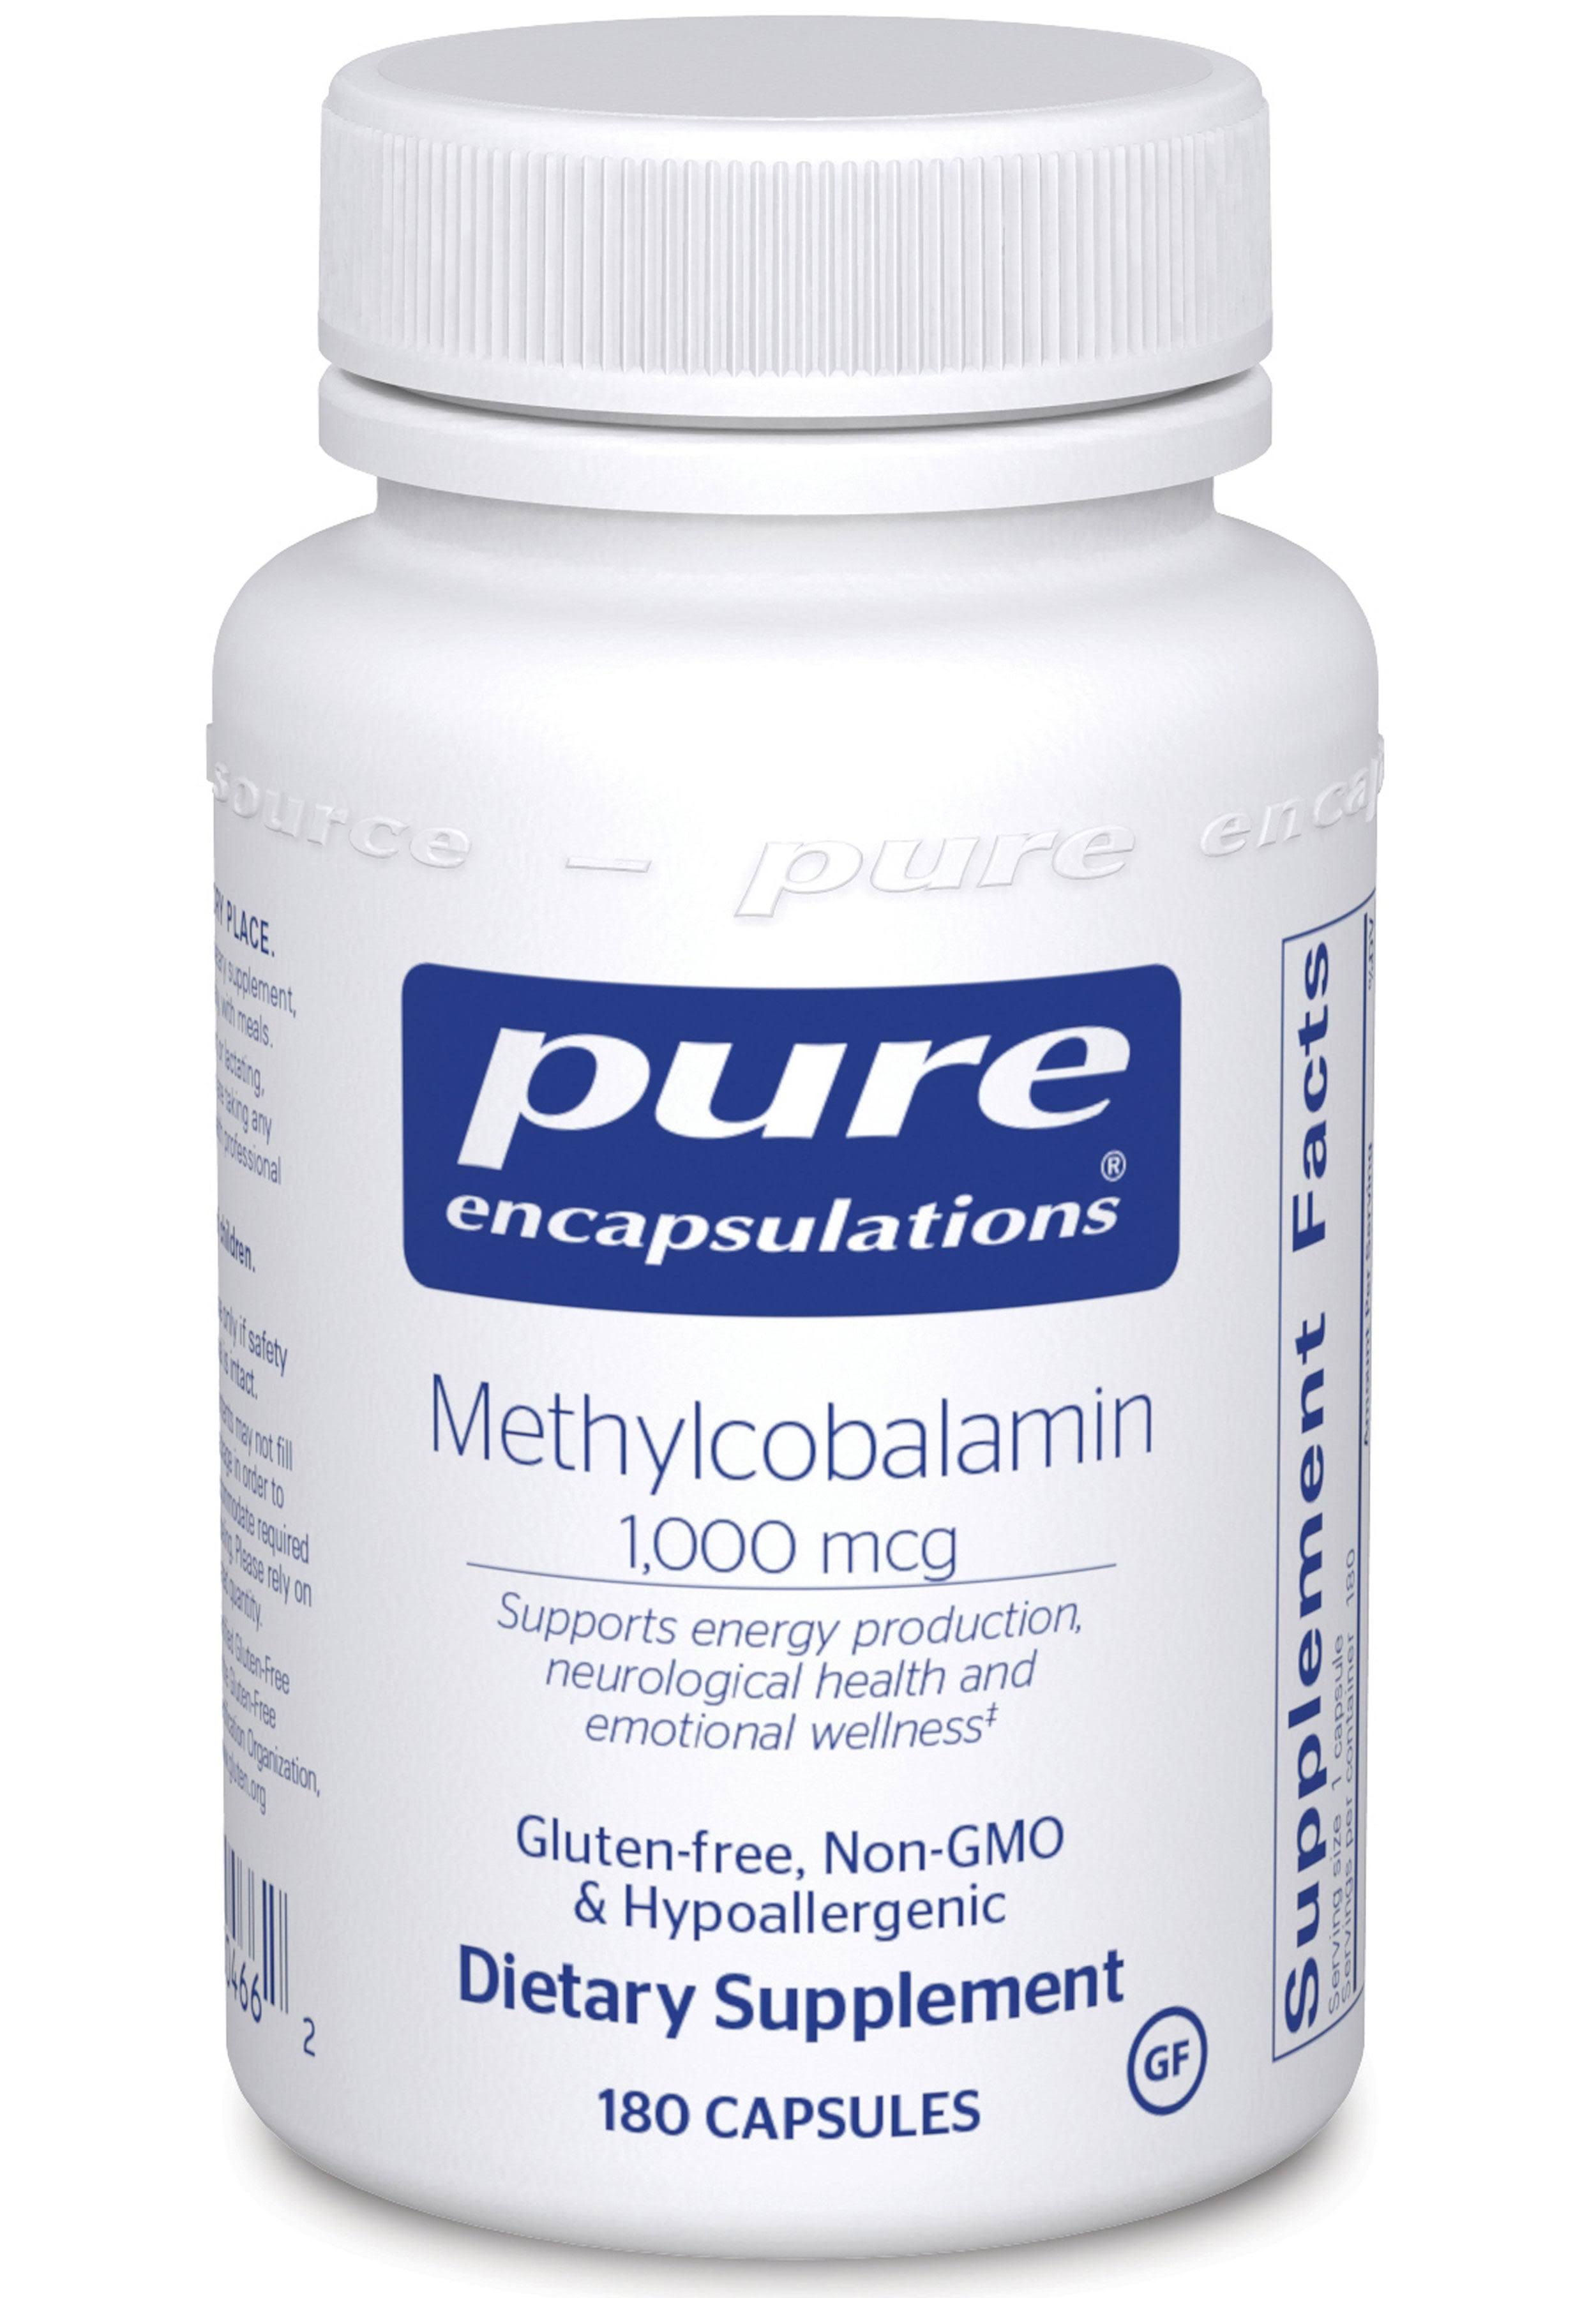 Pure Encapsulations Methylcobalamin Vegetable Capsules - x60